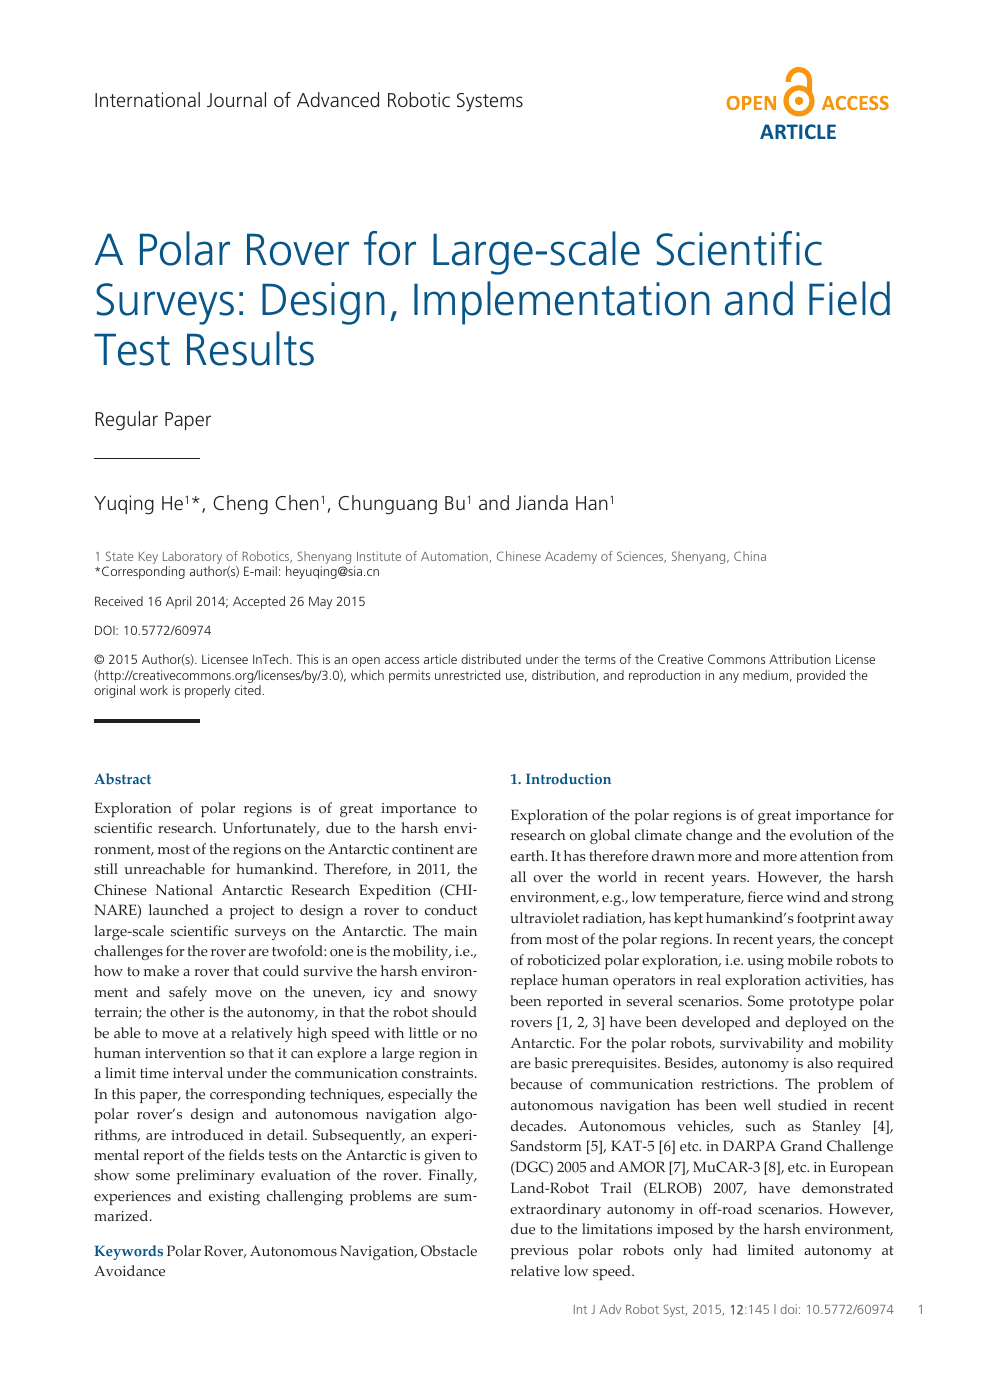 A Polar Rover For Large Scale Scientific Surveys Design - read paper